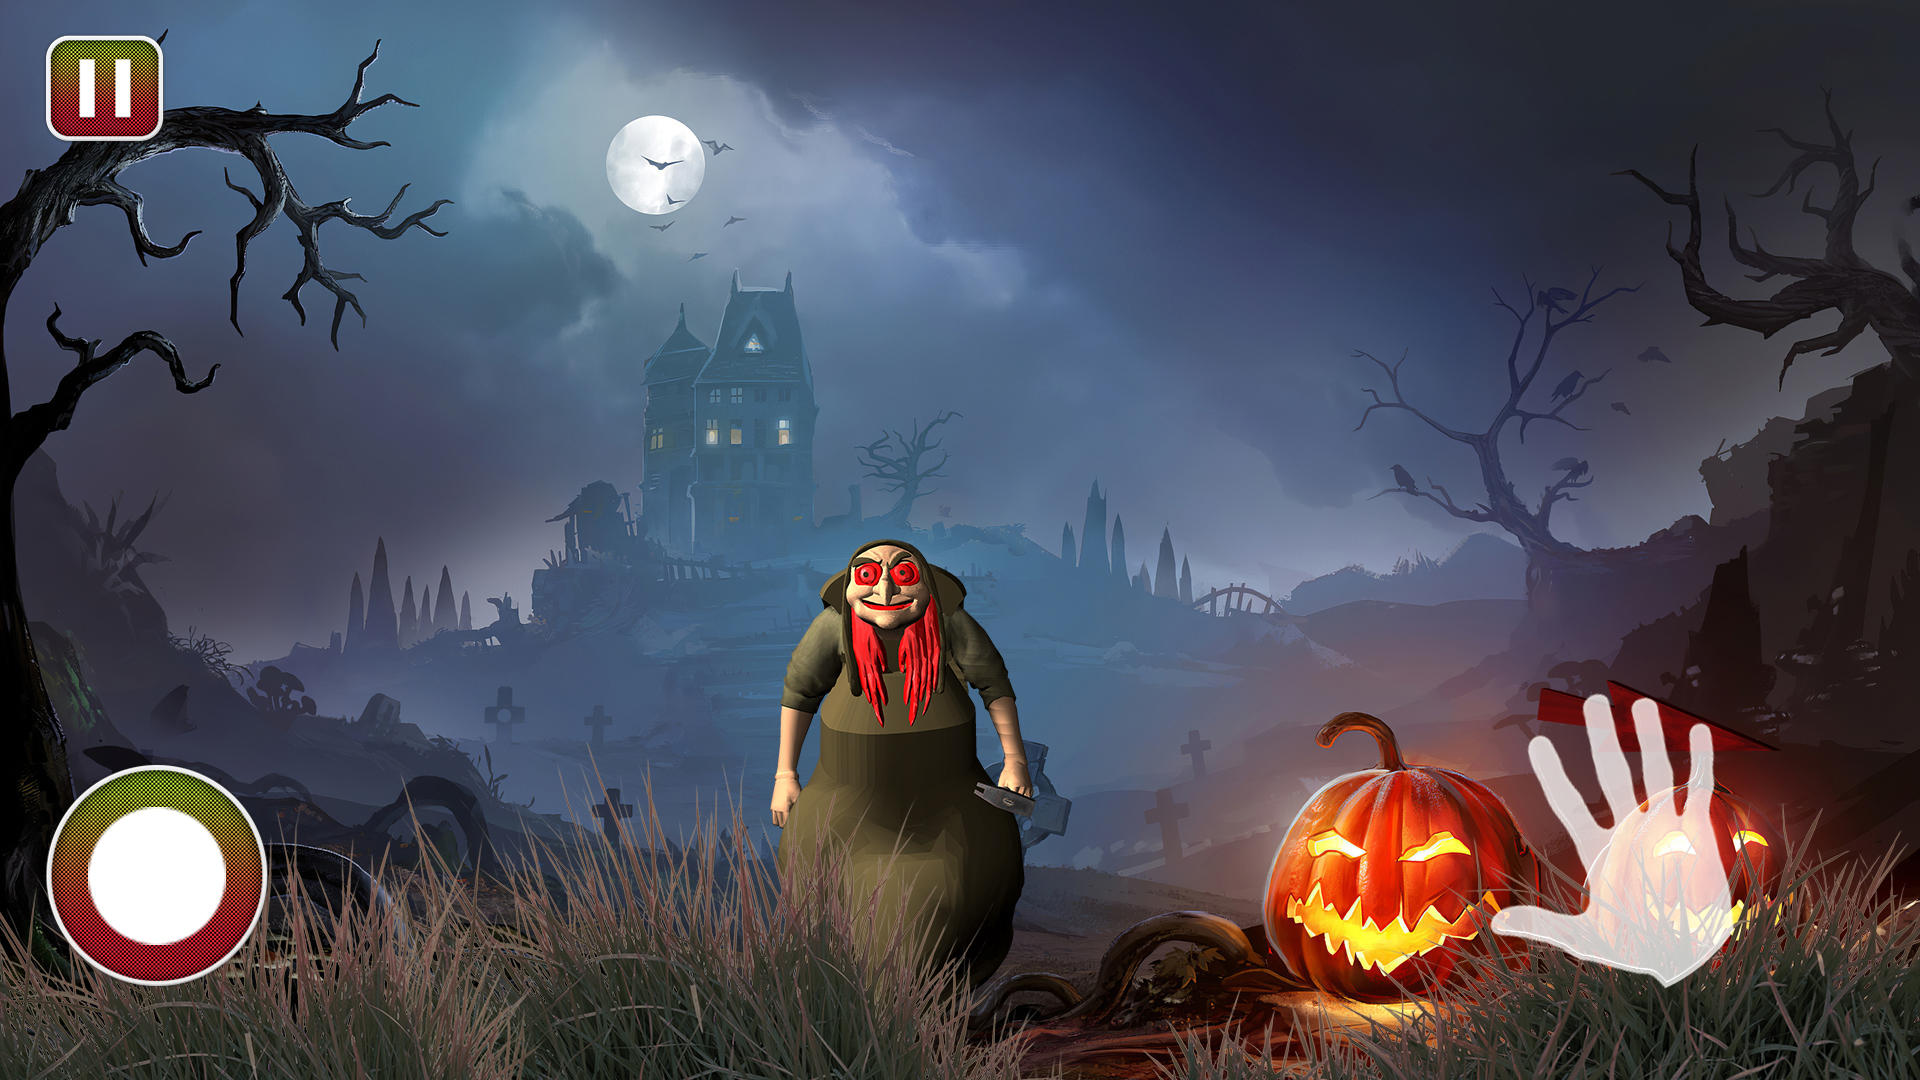 Screenshot 1 of Игра Ведьма: Побег на Хэллоуин 1.8